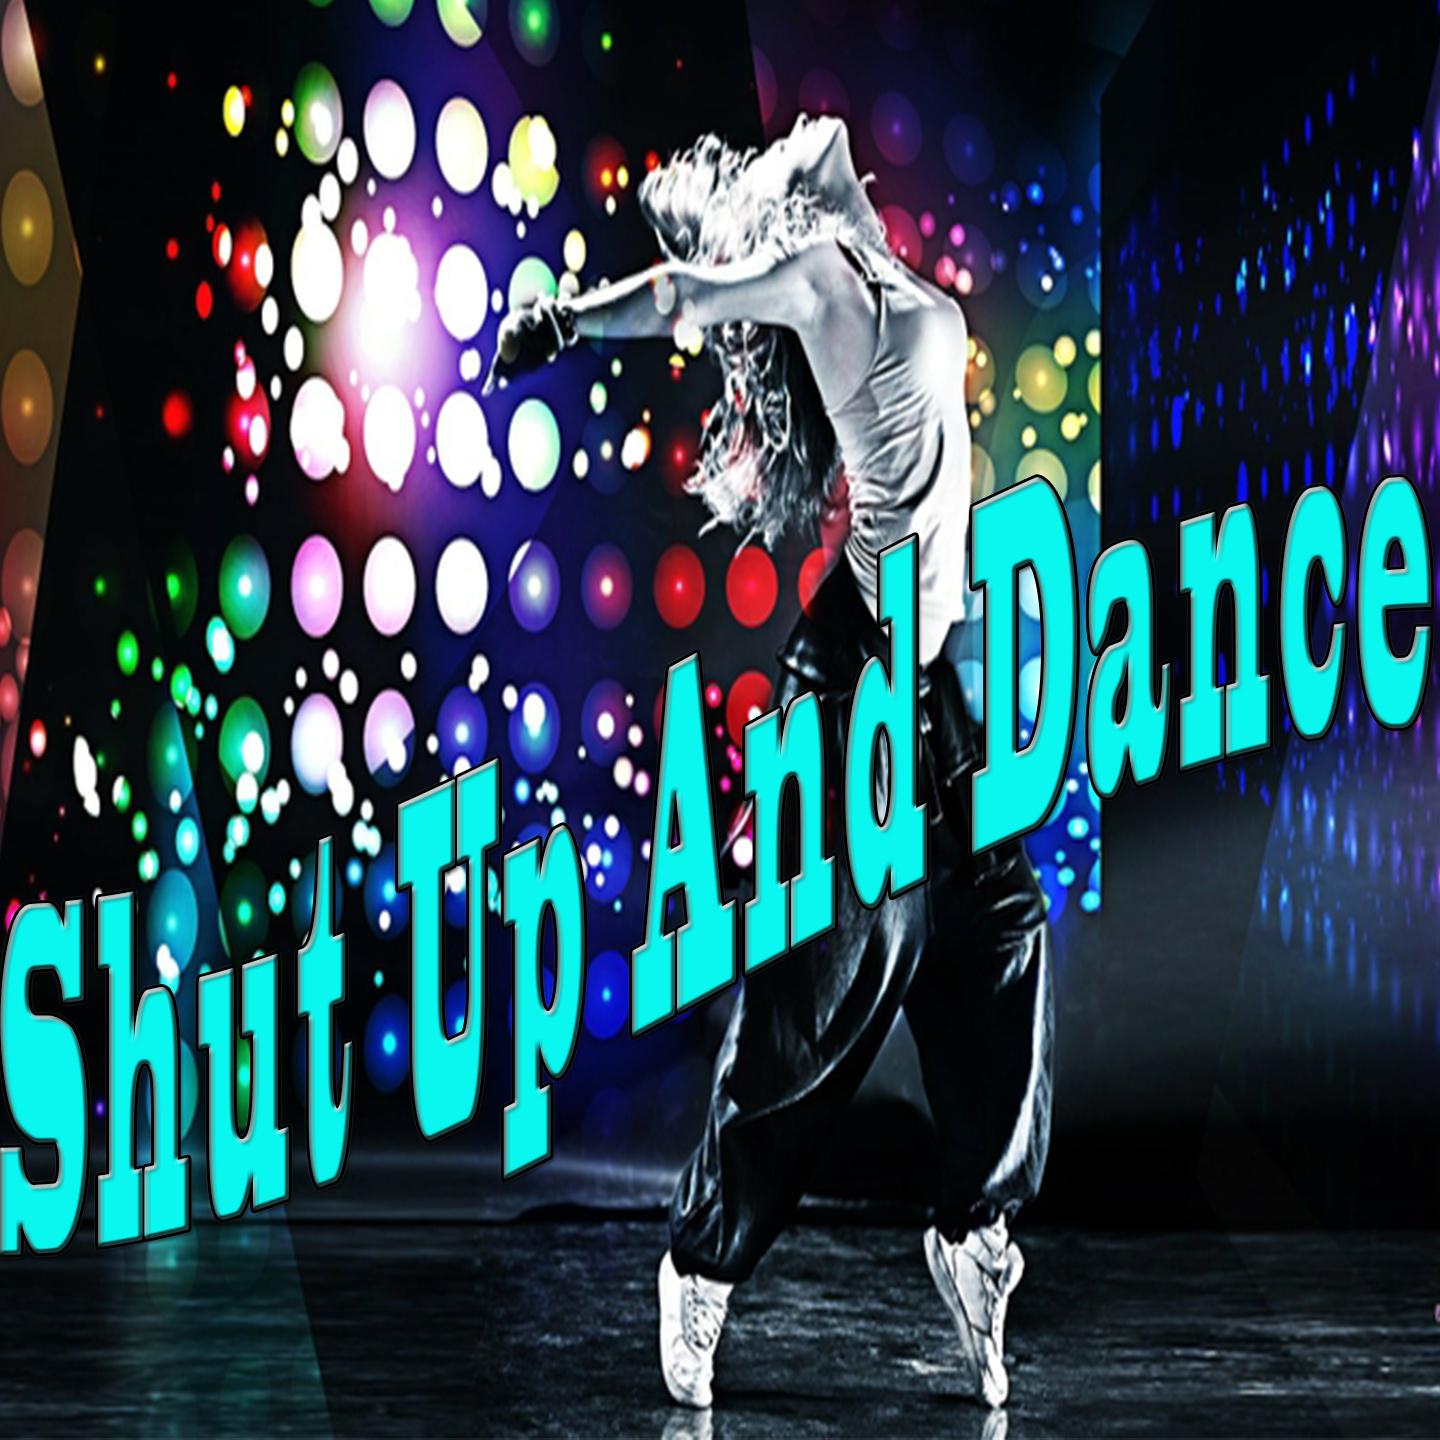 Постер альбома Shut Up and Dance